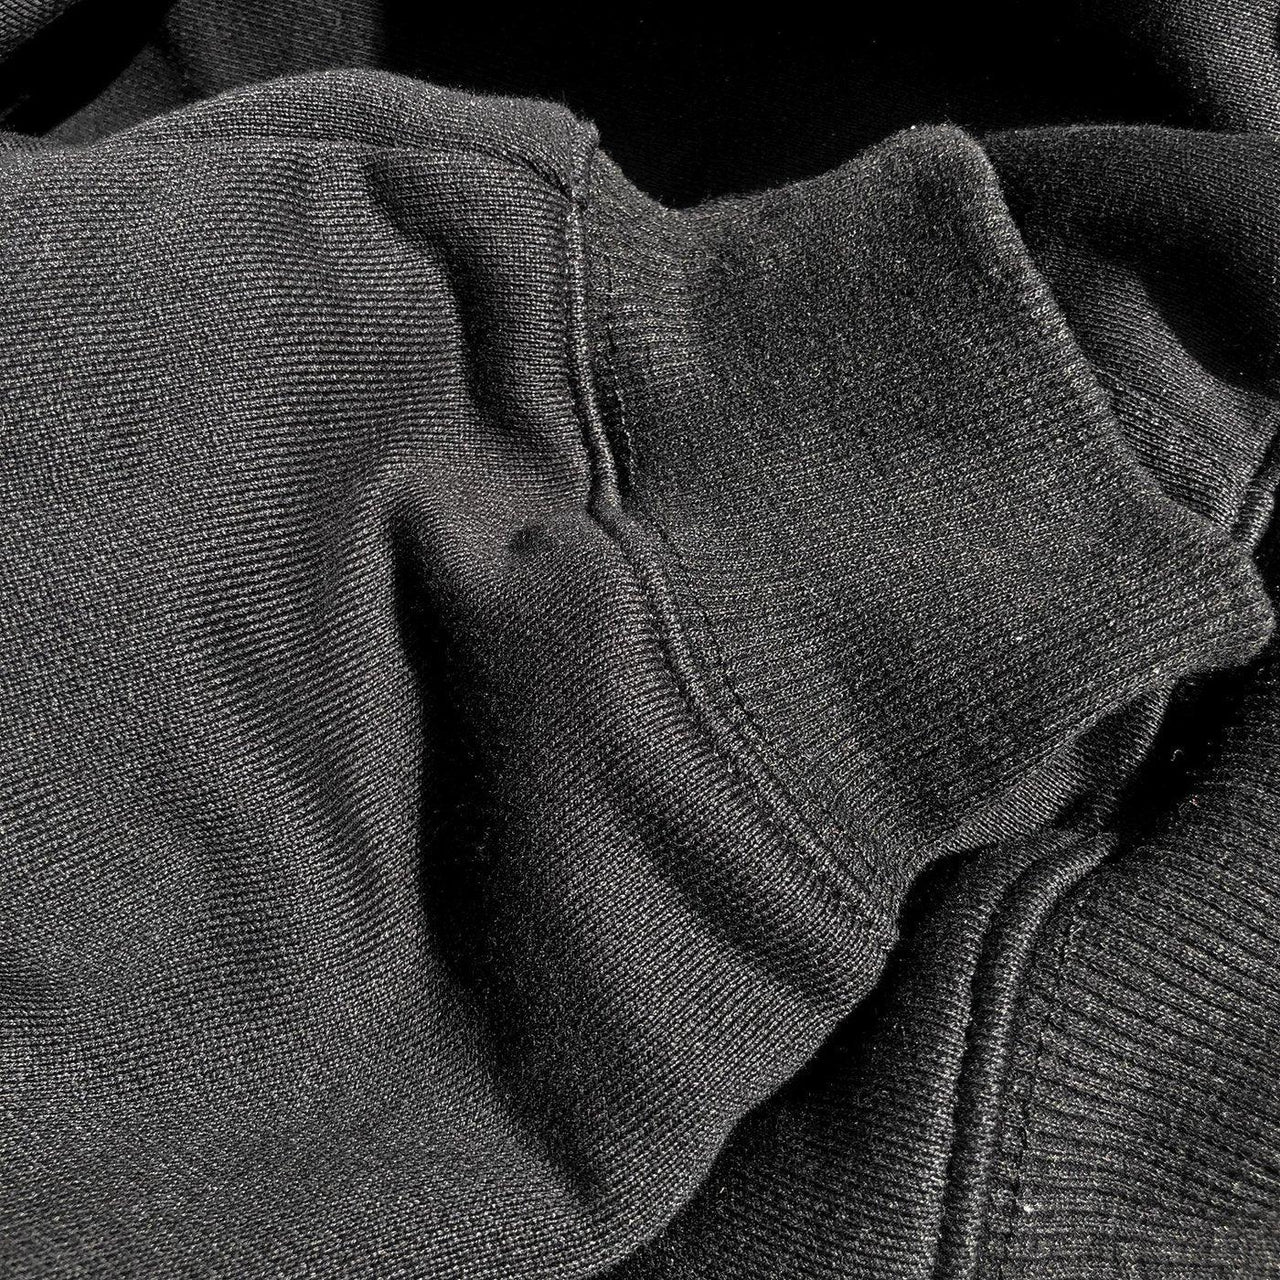 Signature Sweatshirt - Vintage Grey - ITR Apparel